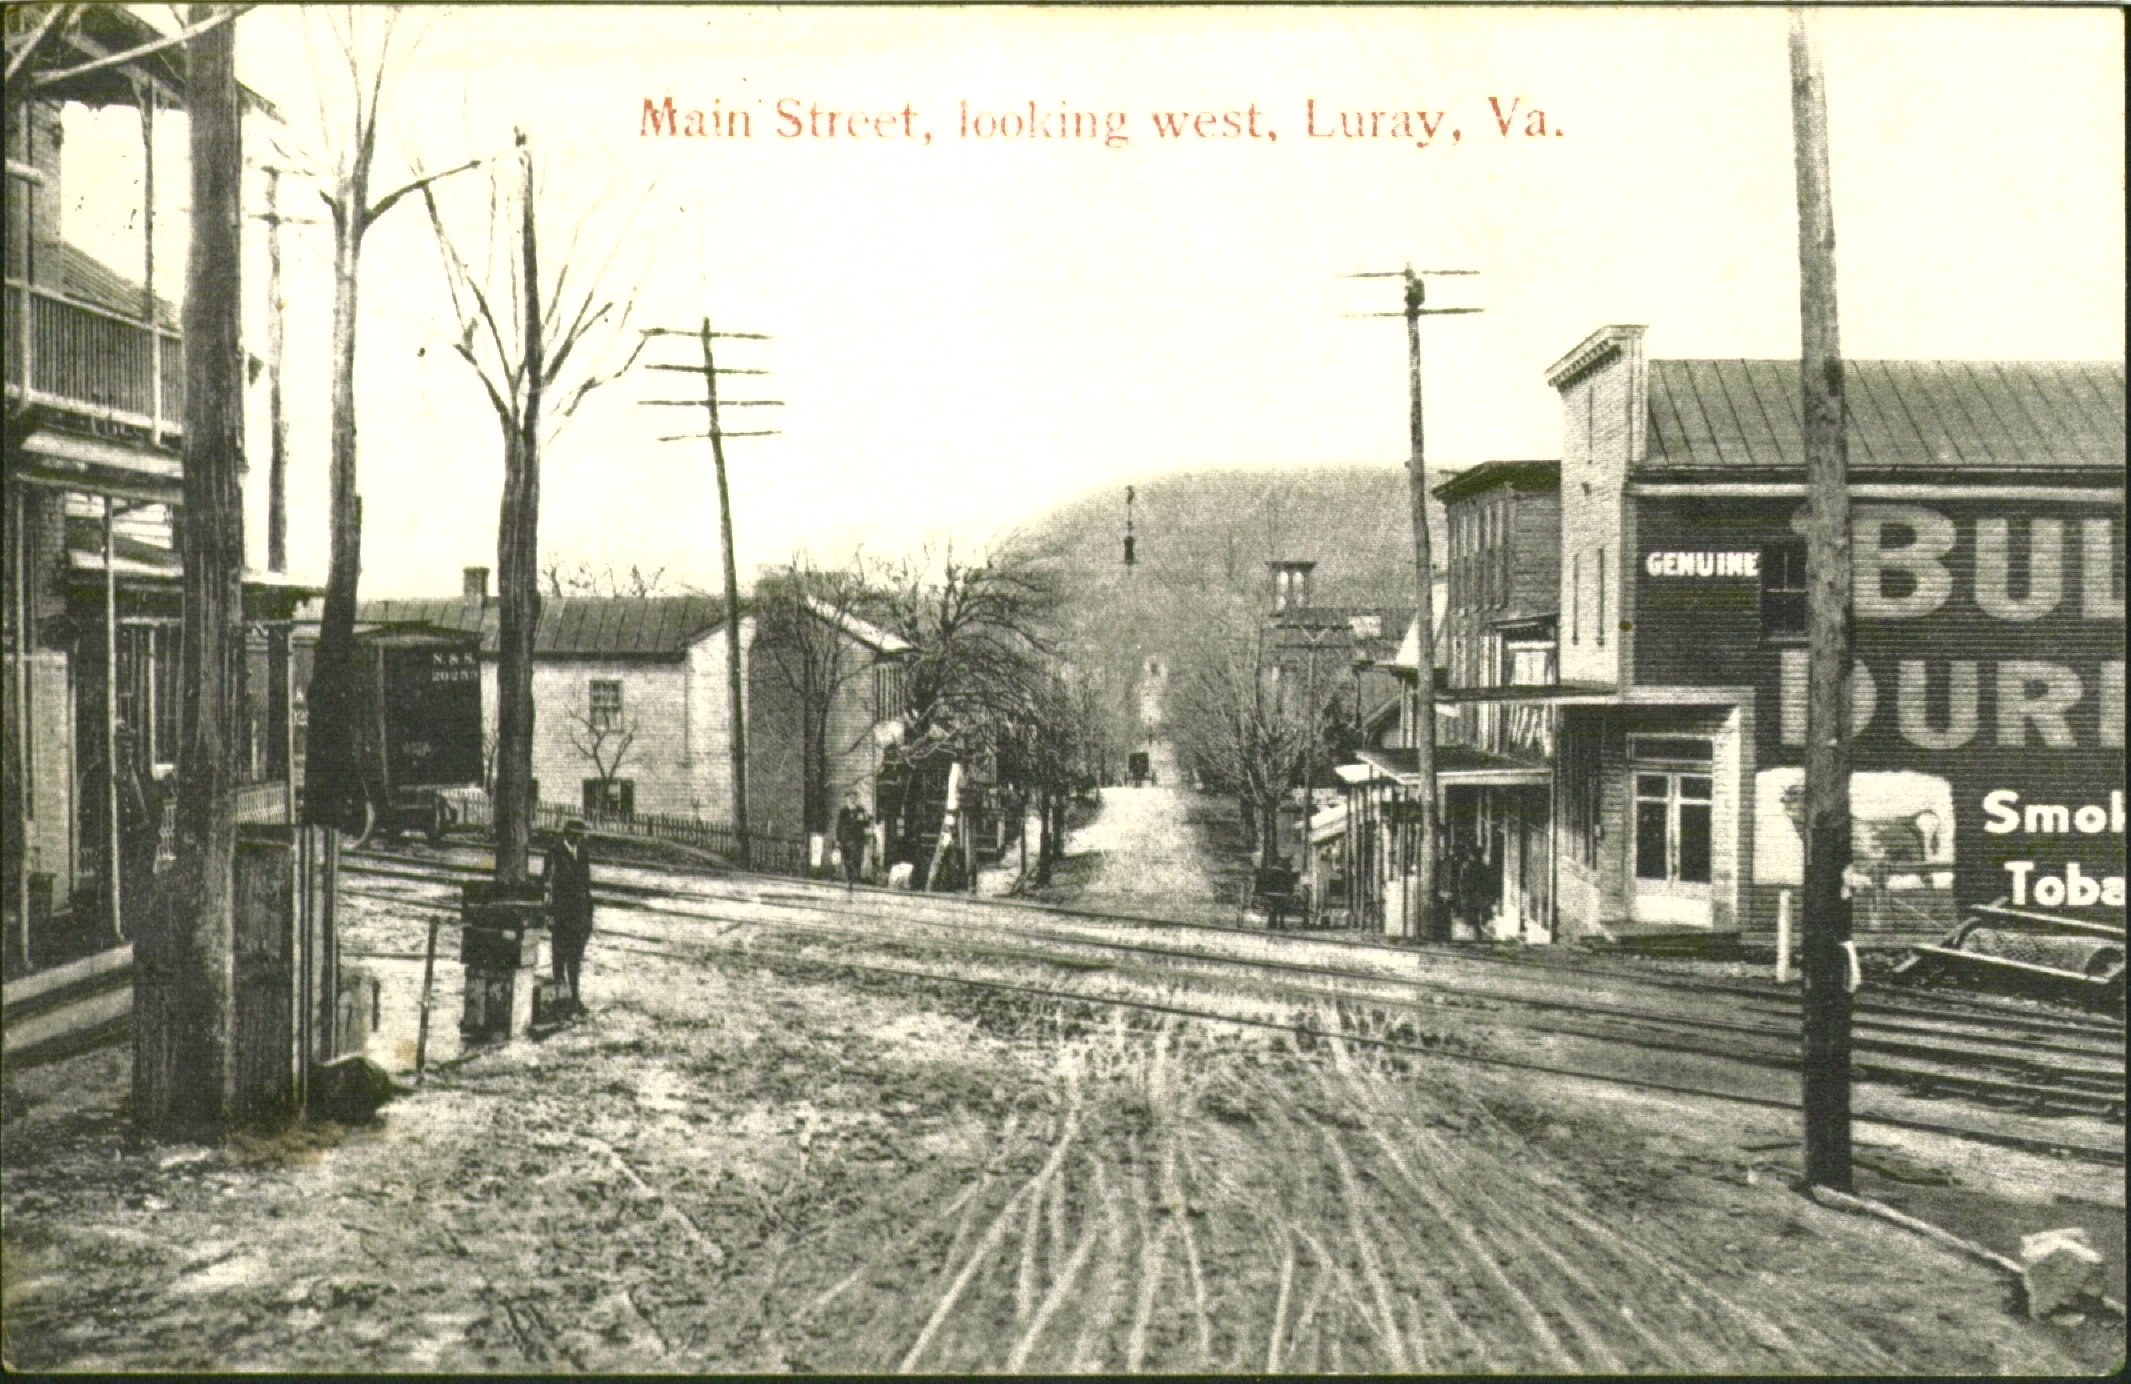 Main Street, looking west, Luray, VA, 1910. Photo by Bill McChesney.